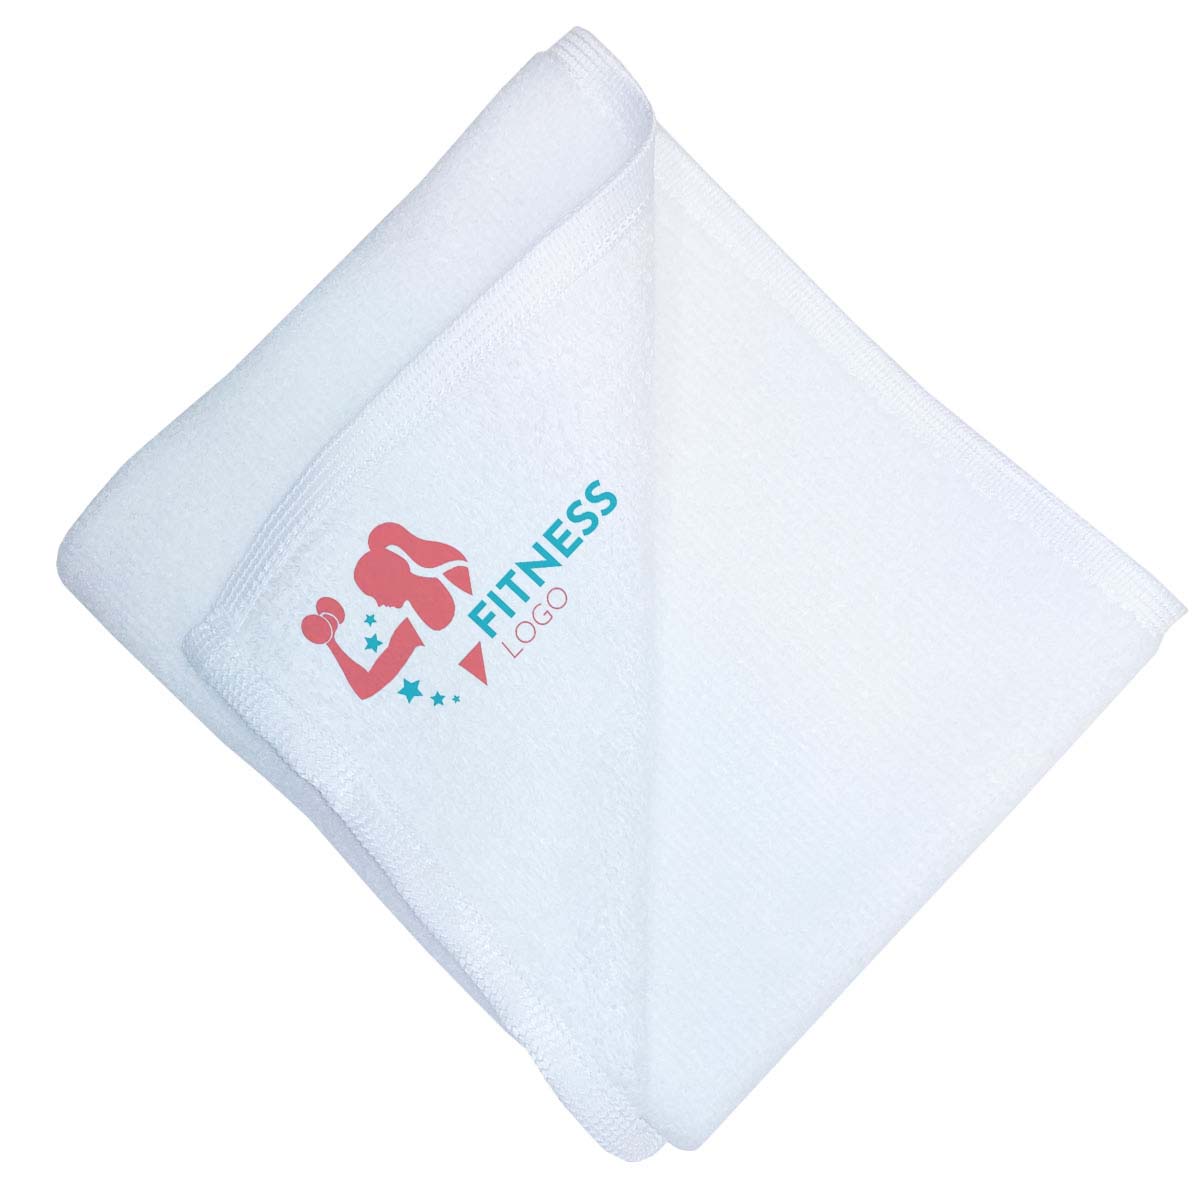 Towel for sublimation - 10 pieces